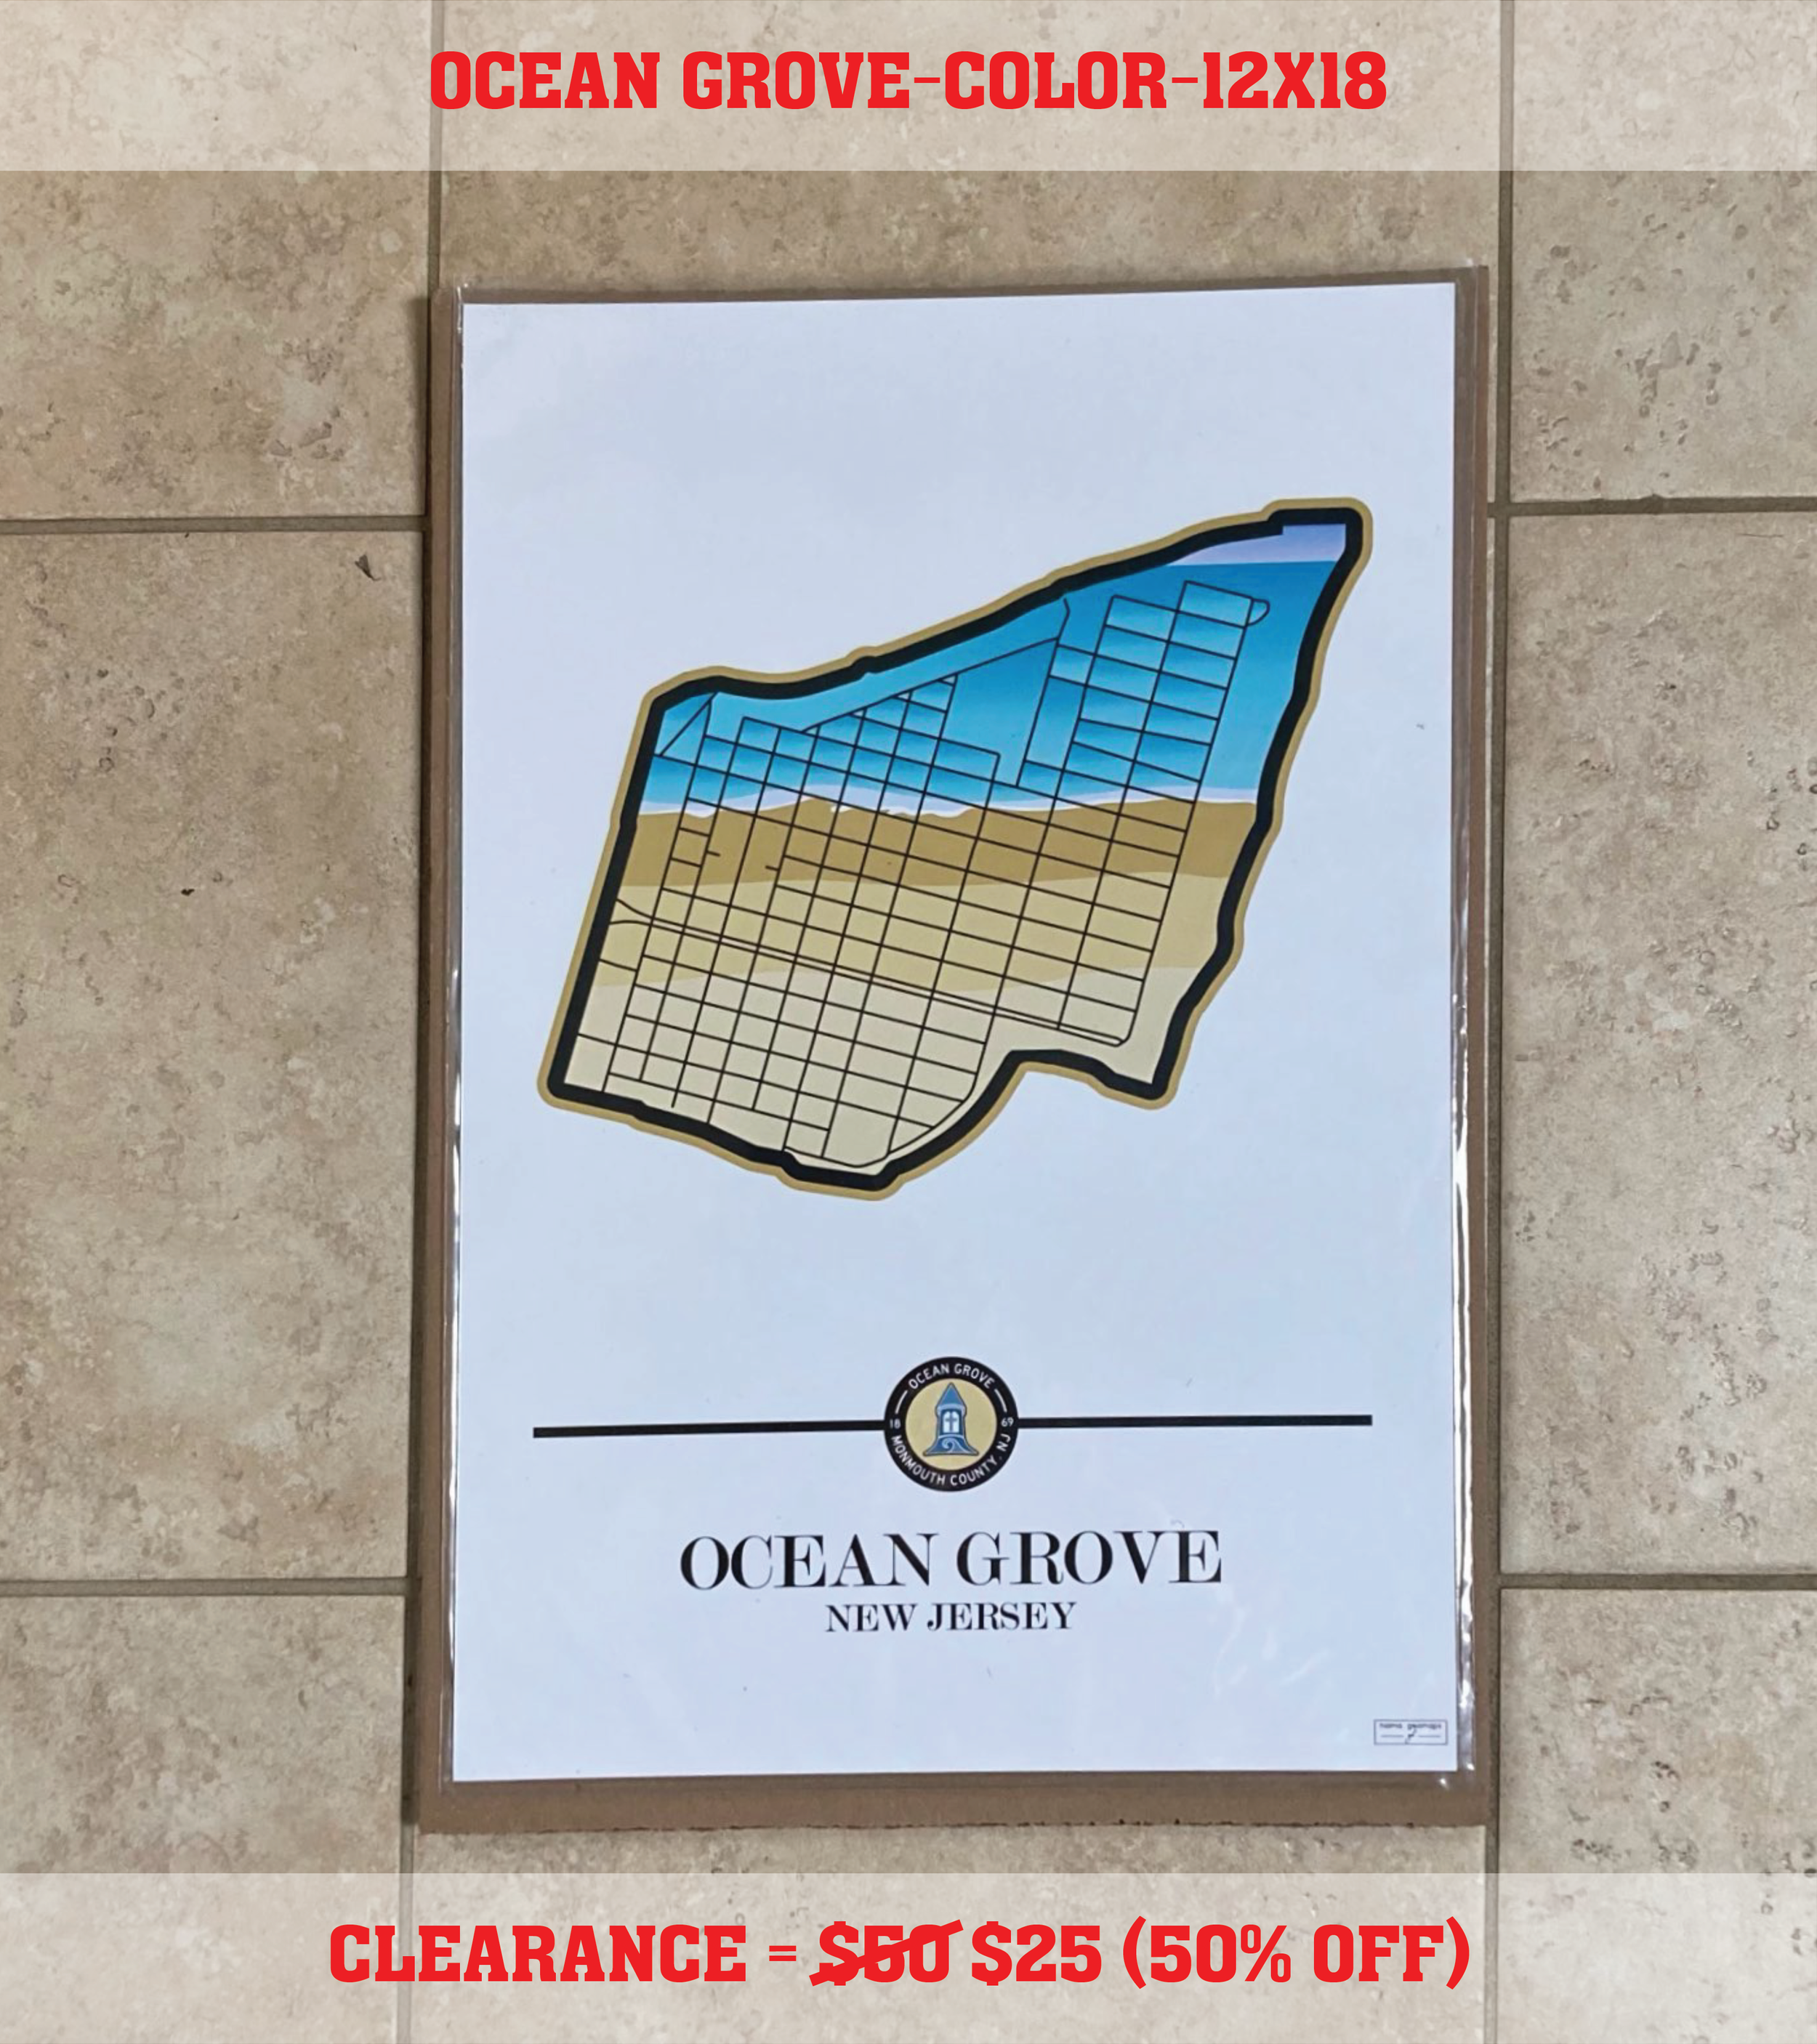 Ocean Grove (12x18) Color